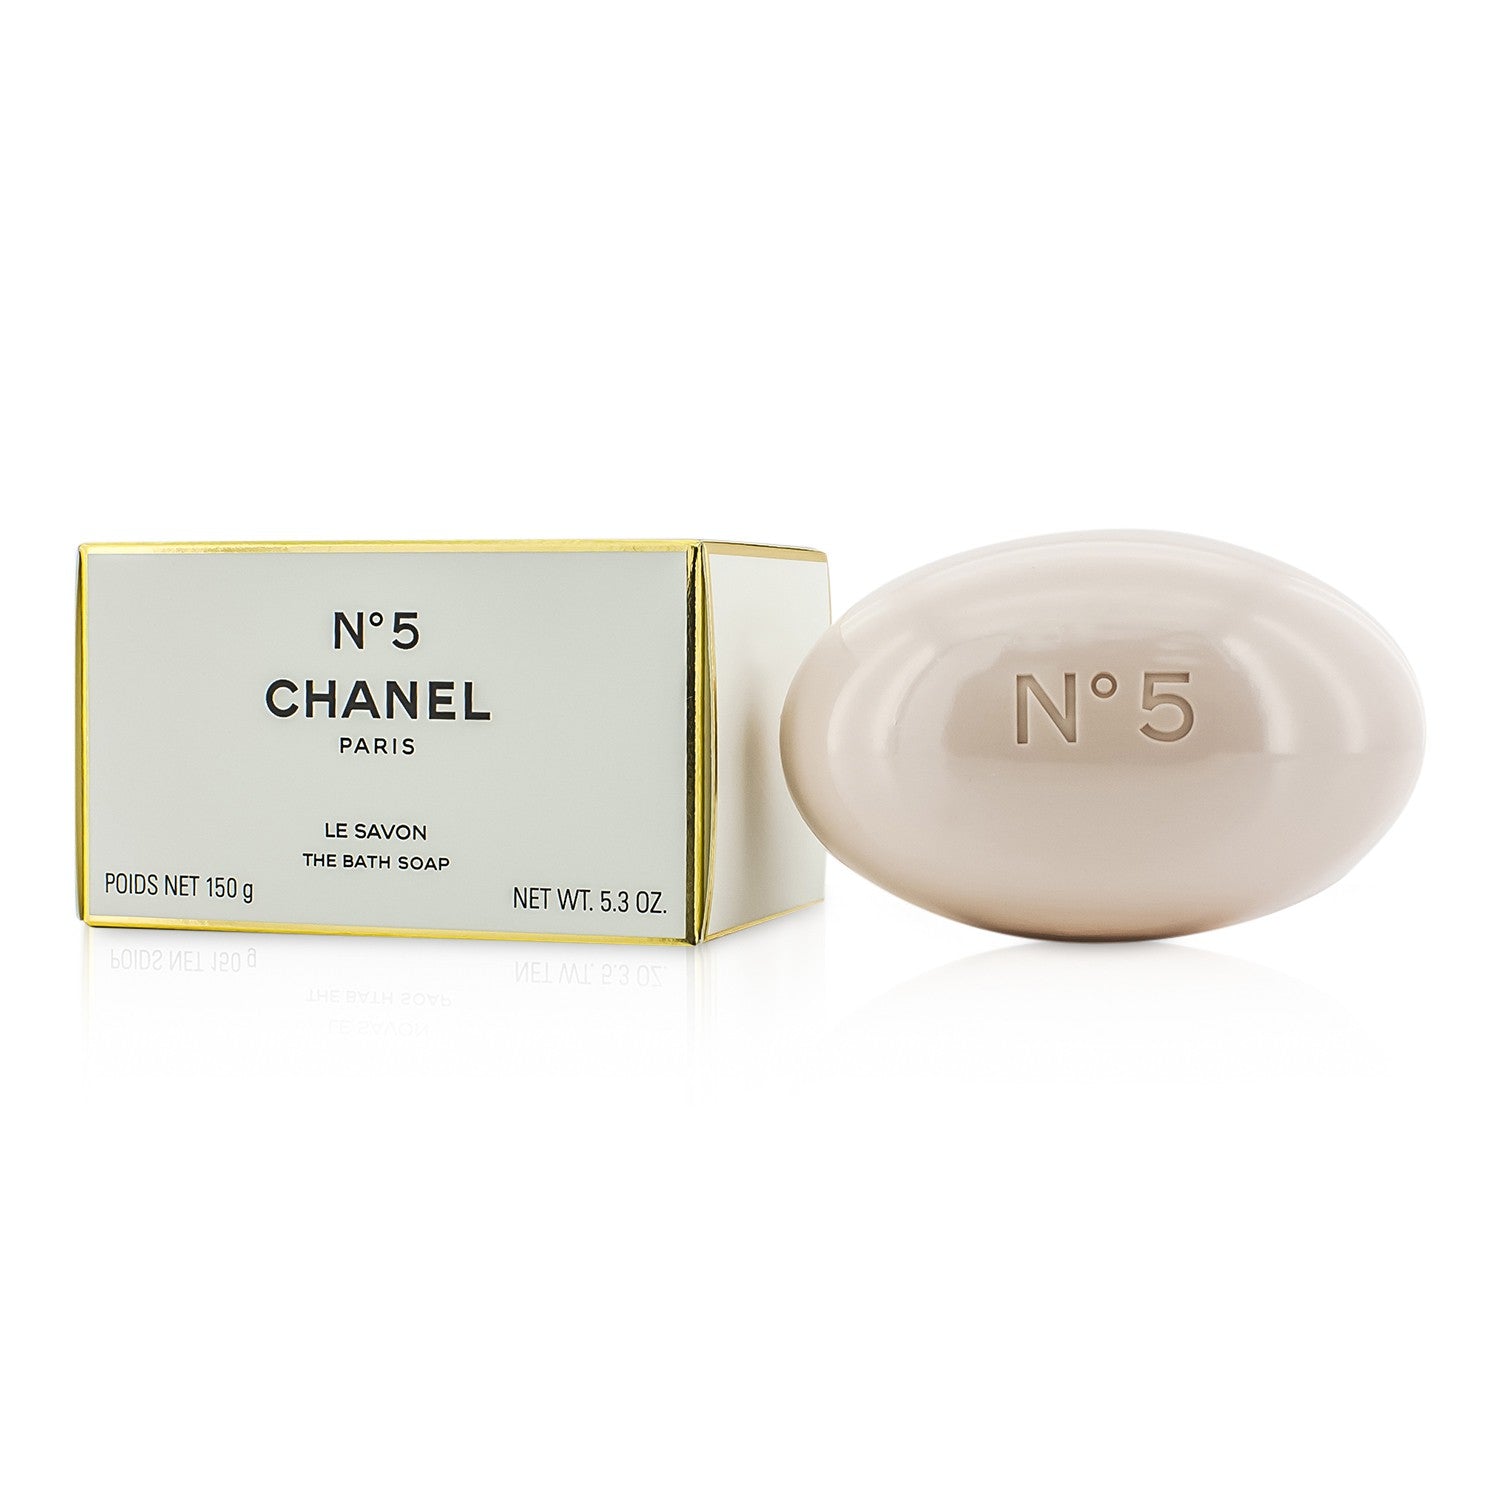  Chanel CHANEL Coco Noir Body Cream 5.3 oz (150 g